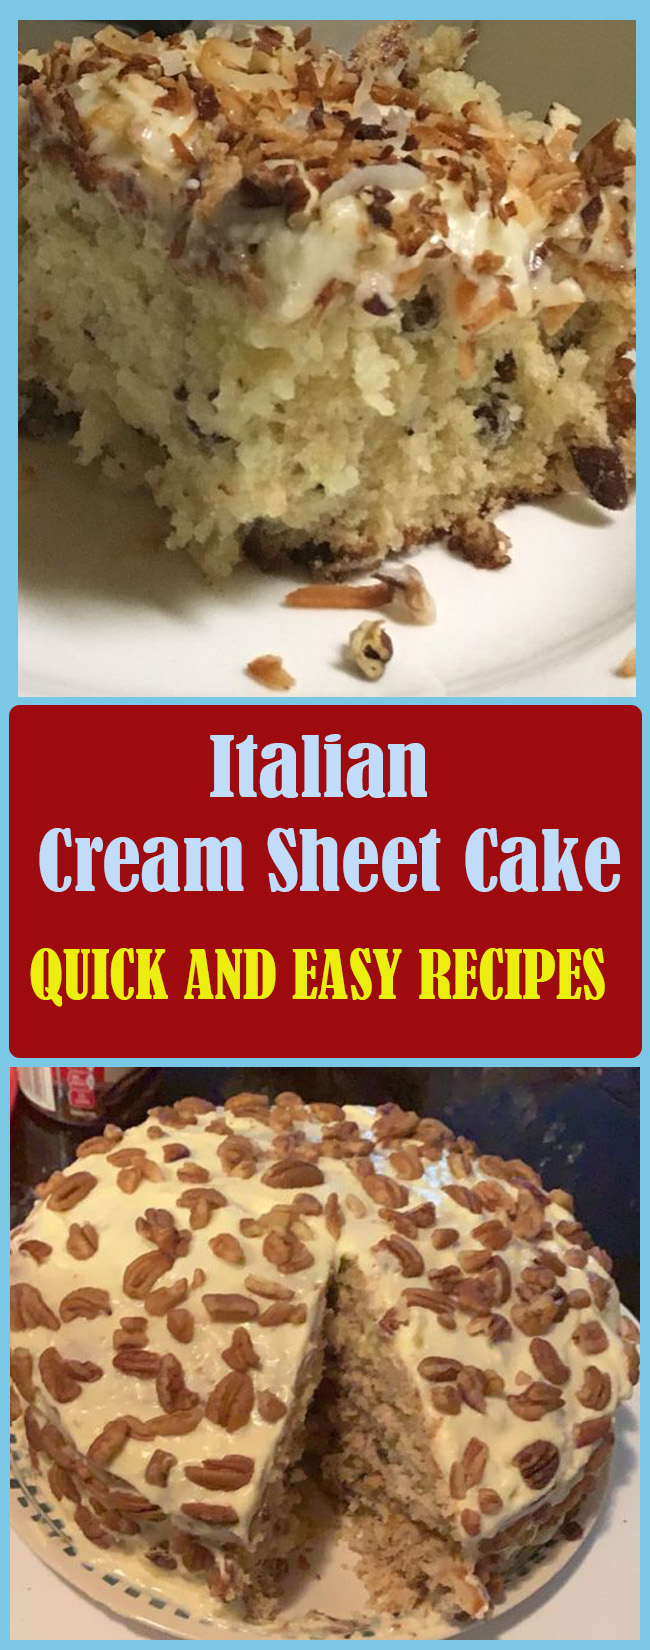 Italian Cream Sheet Cake